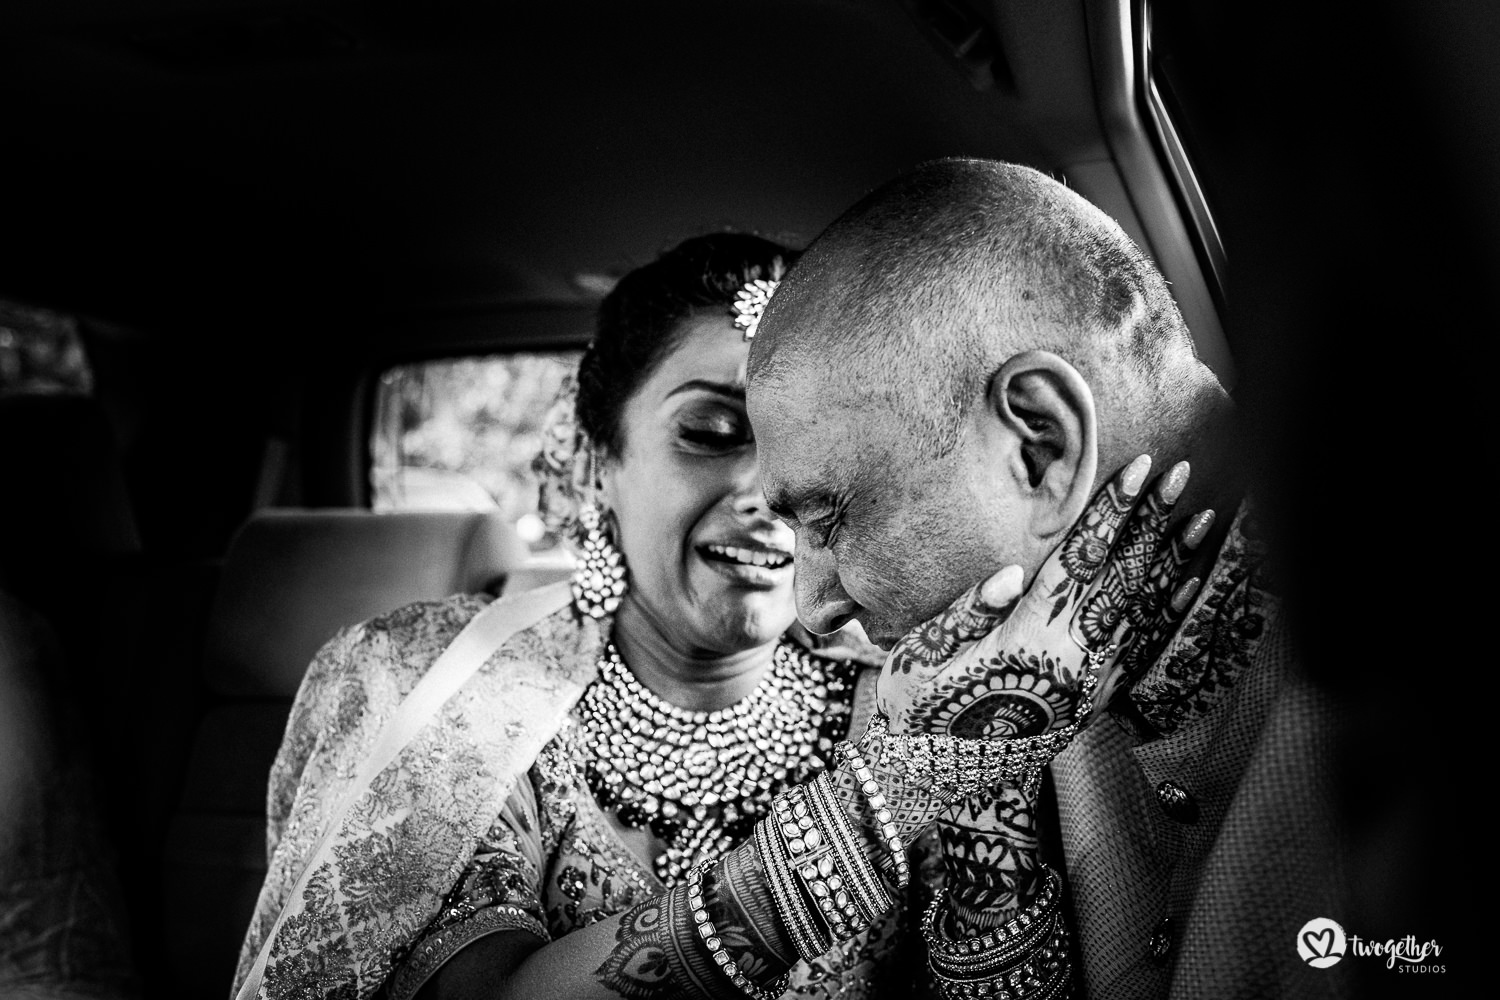 Indian bride cries as she bids her father farewell at a Kenya destination wedding